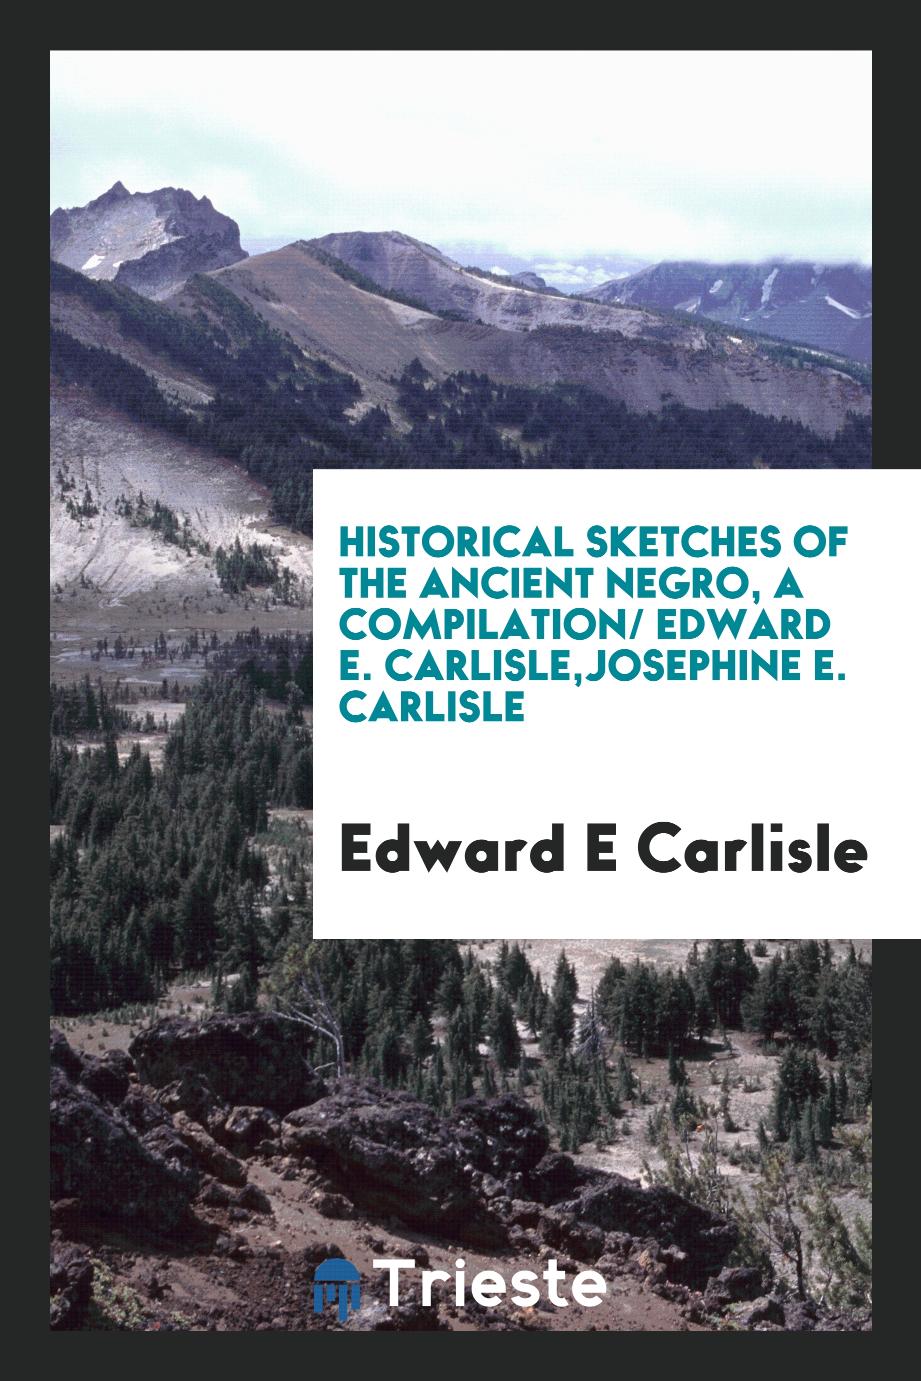 Historical sketches of the ancient Negro, a compilation/ Edward E. Carlisle,Josephine E. Carlisle